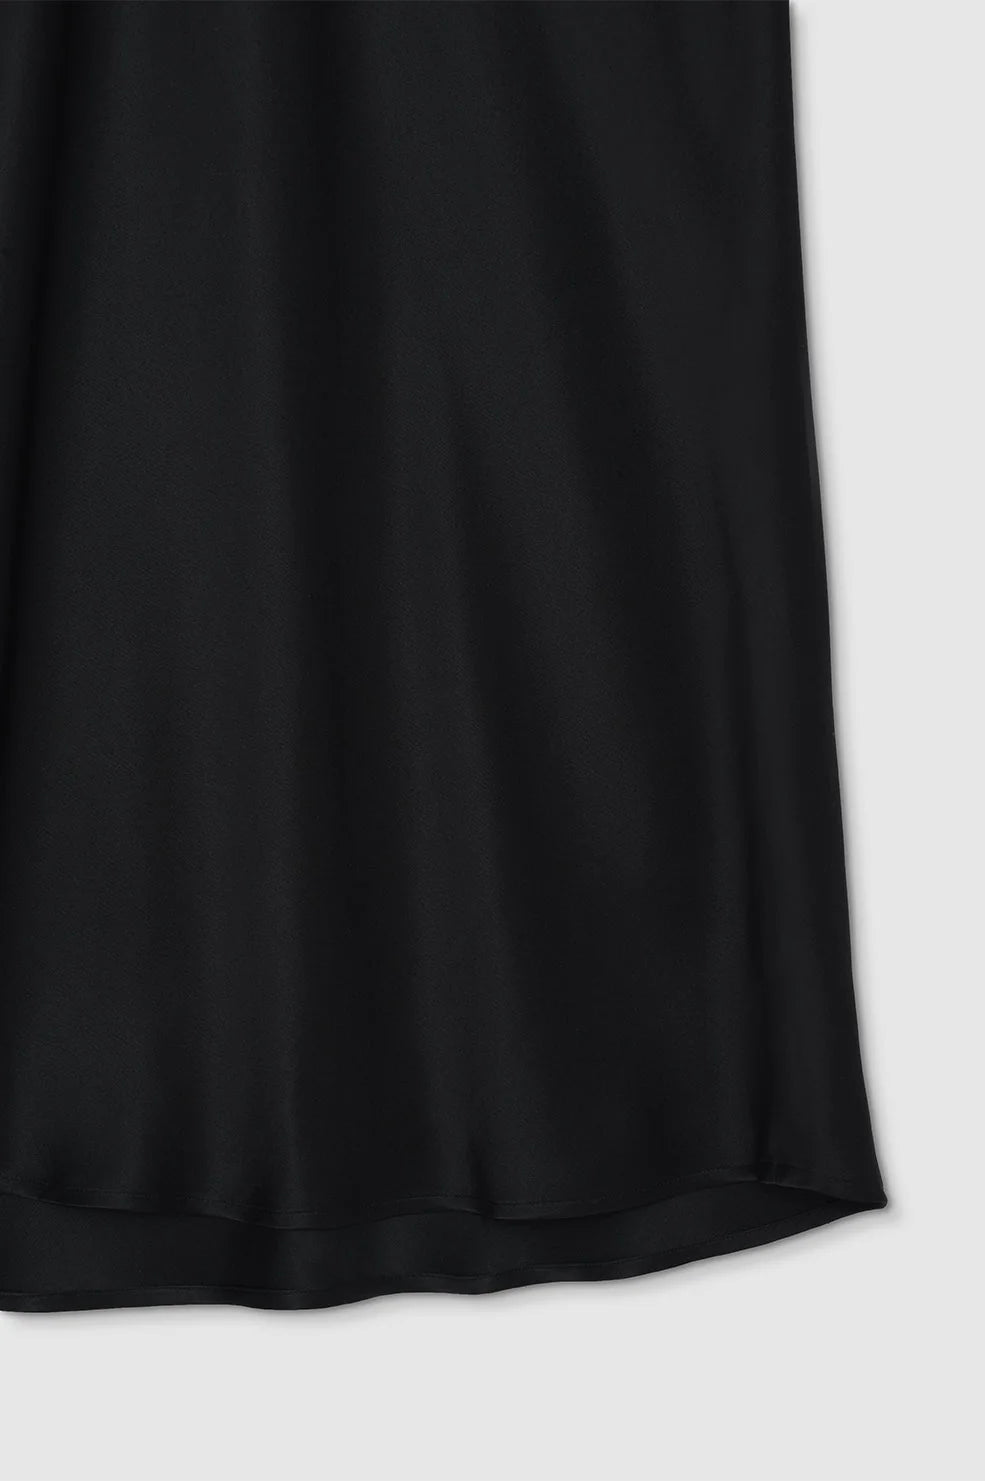 Anine Bing Bar Silk Maxi Skirt - Black